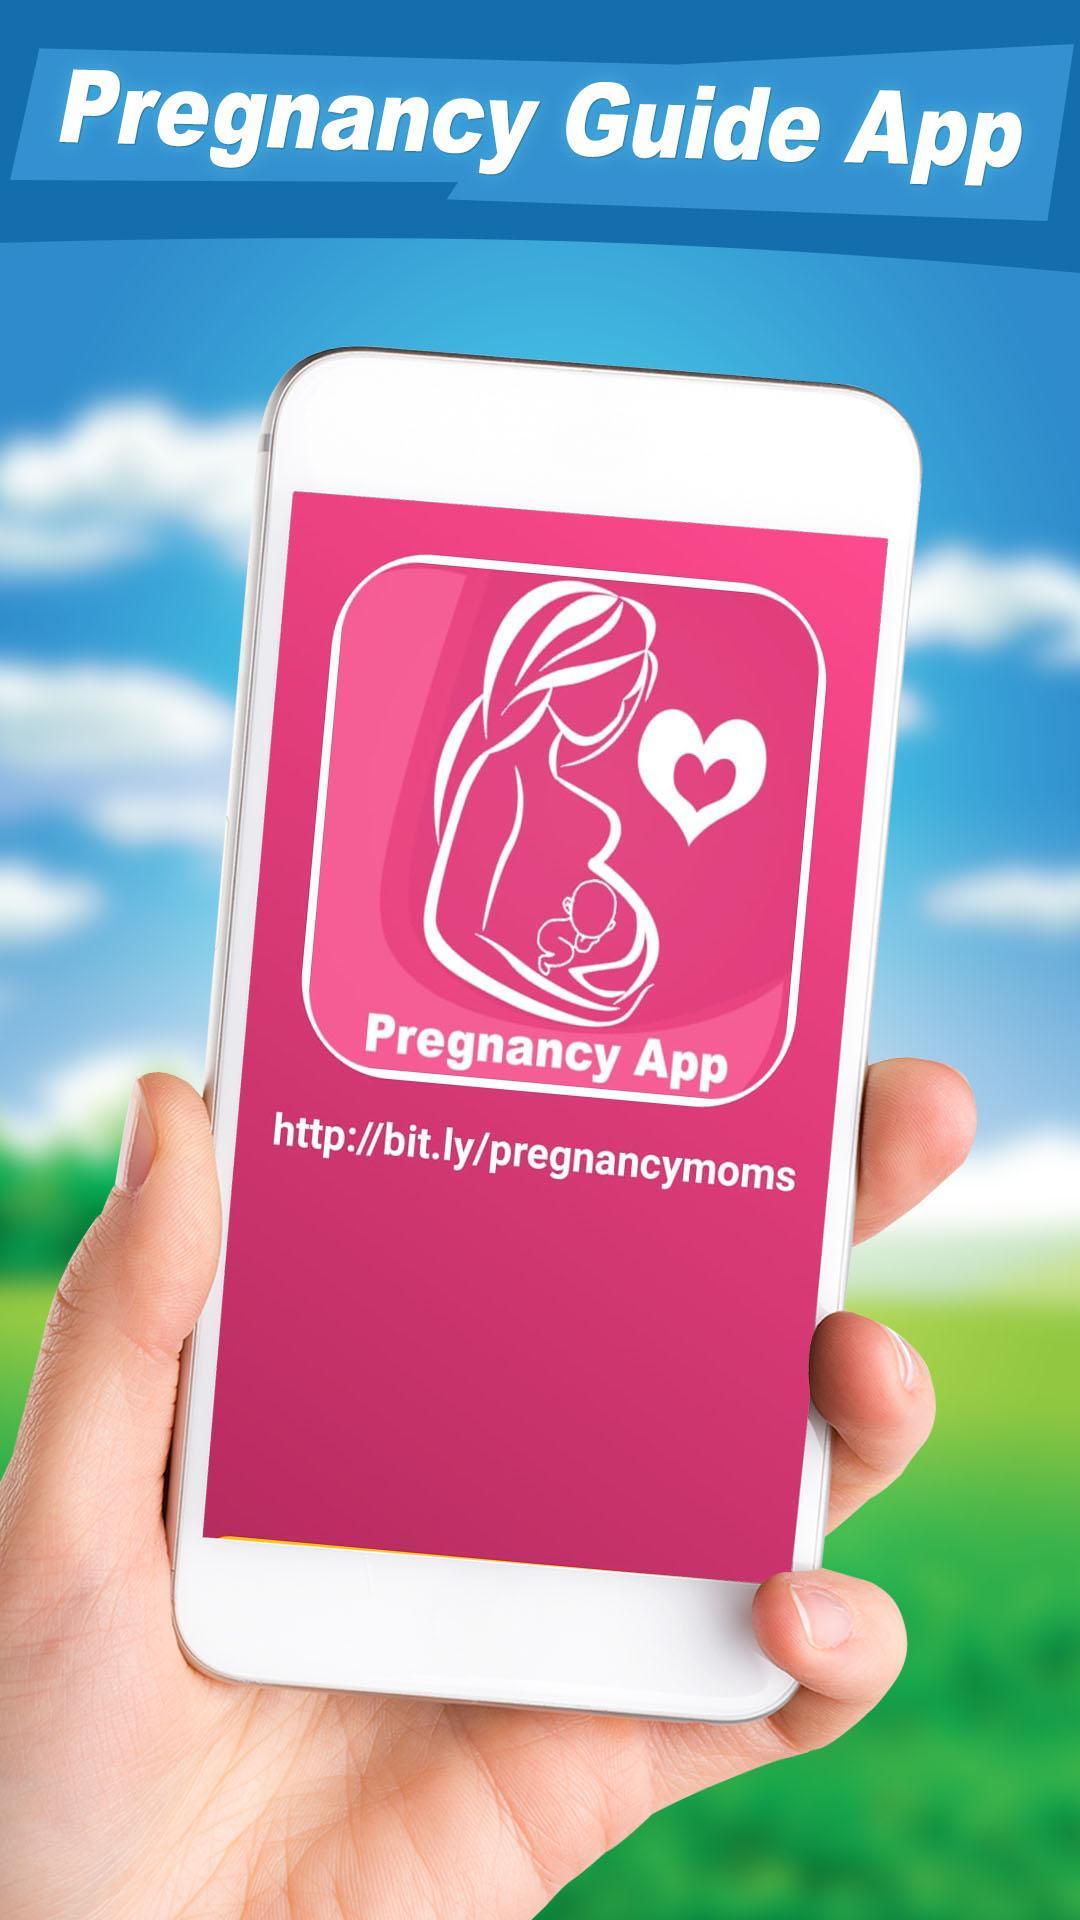 Pregnancy Guide App Pregnancy Guide App 4.0 Screenshot 1